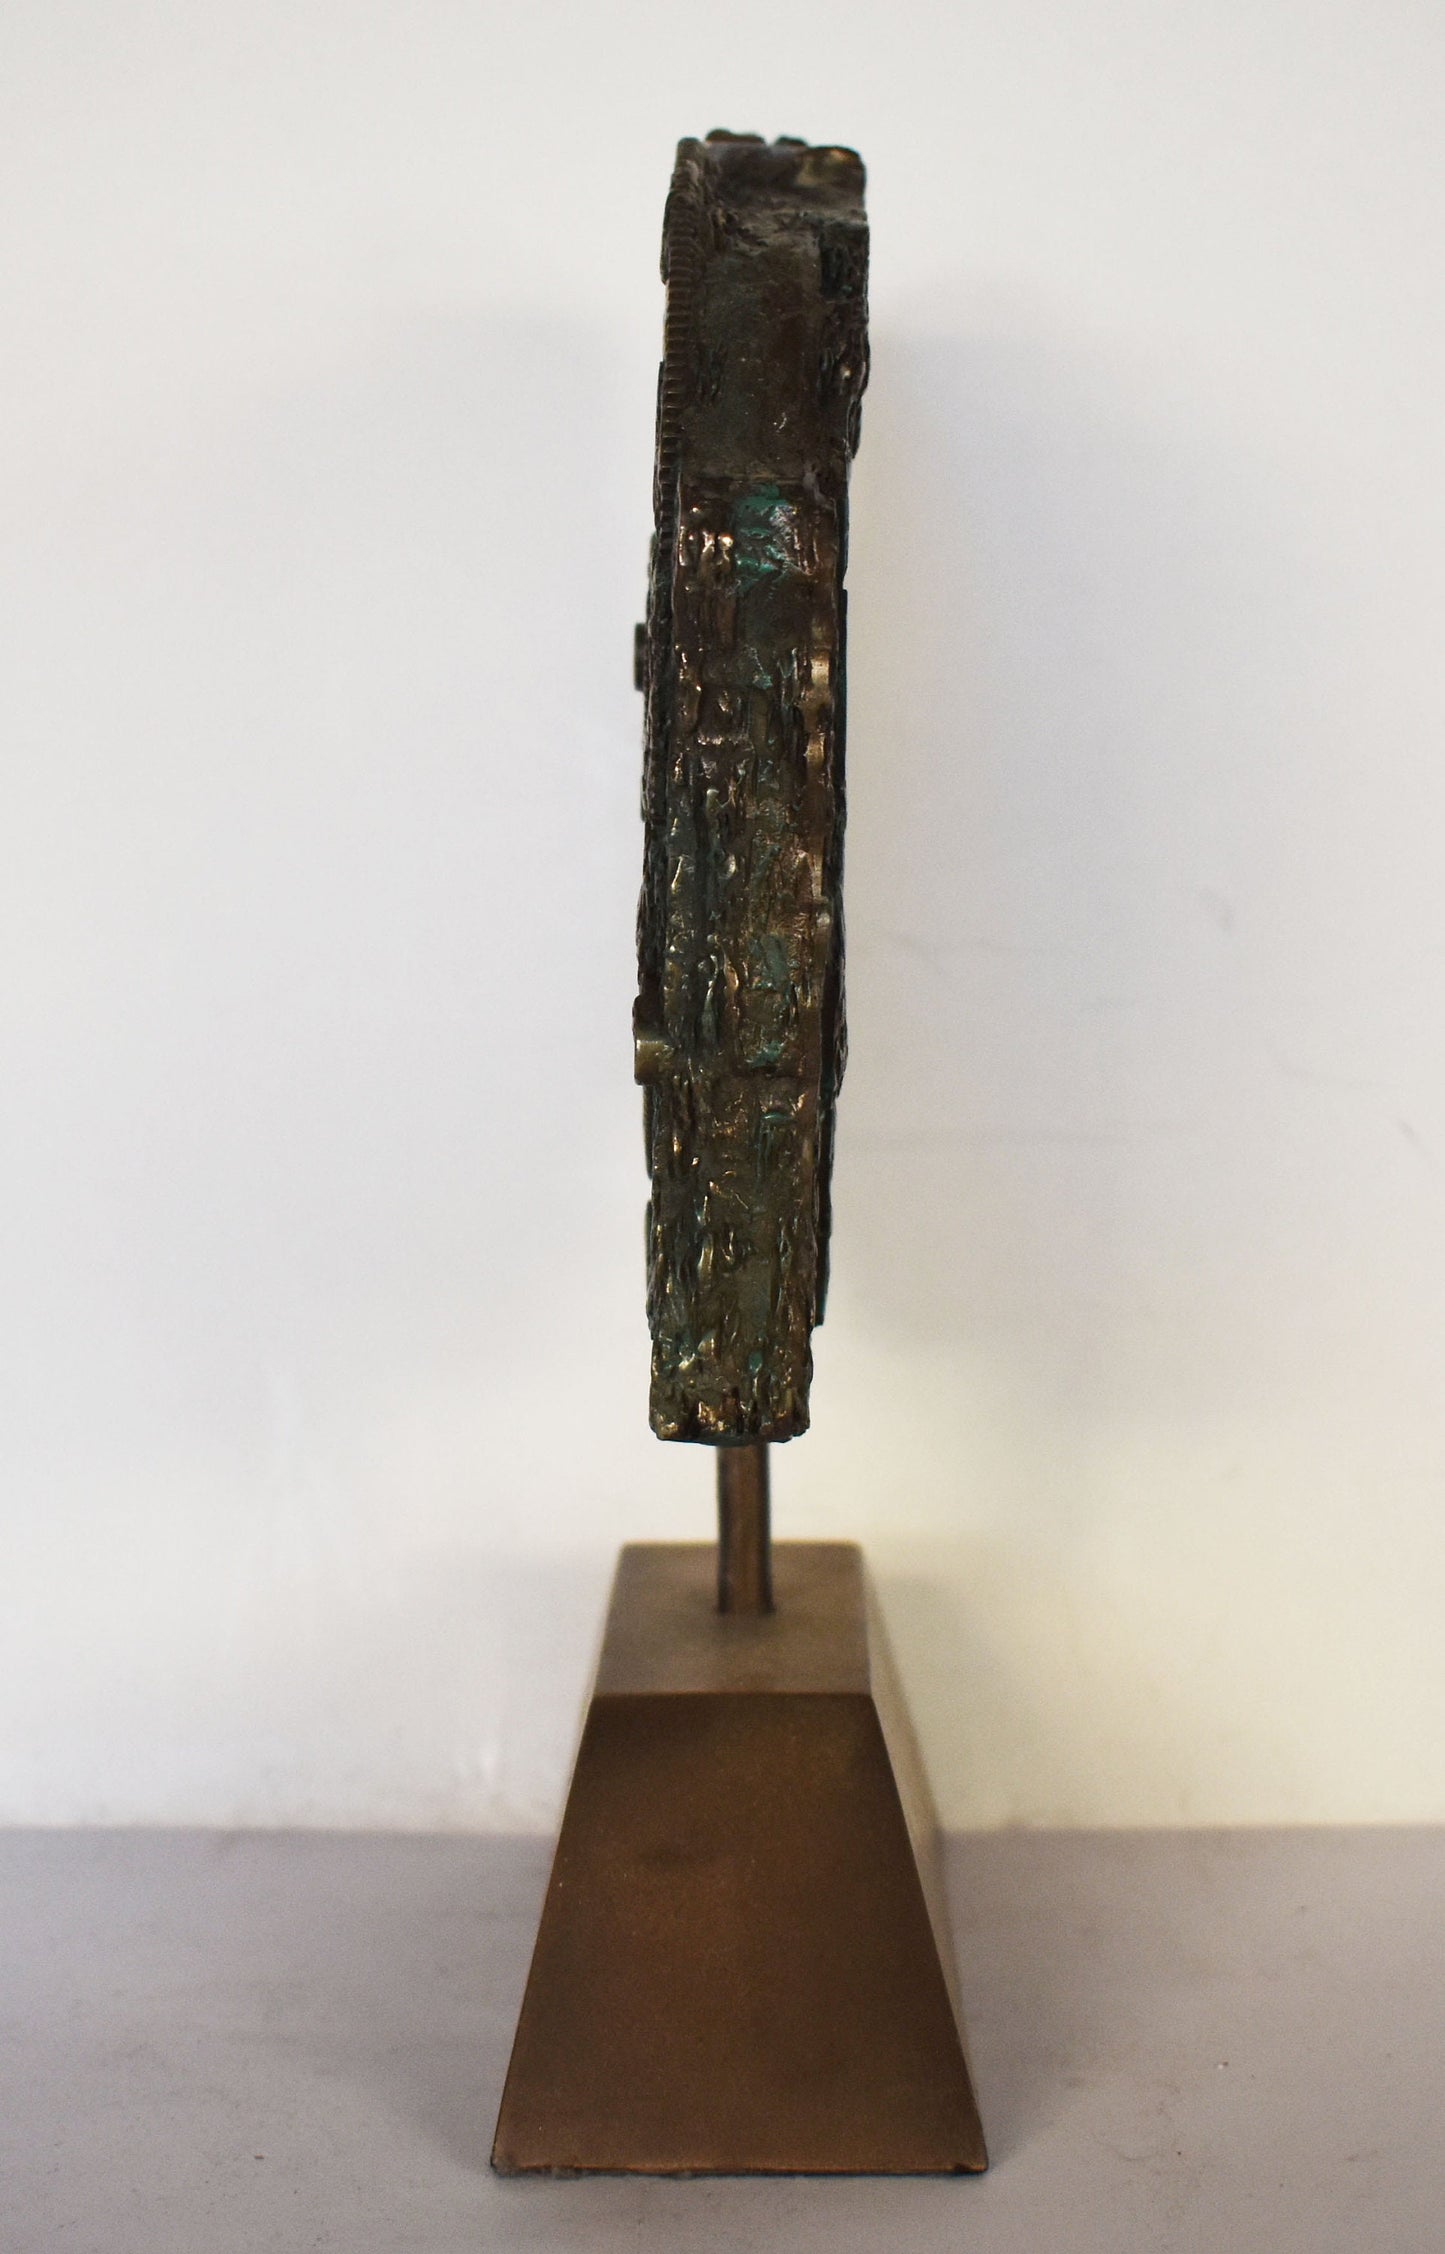 Antikythera Mechanism - The Ancient Greek Analogue Computer - Museum Replica - Cold Cast Bronze Resin